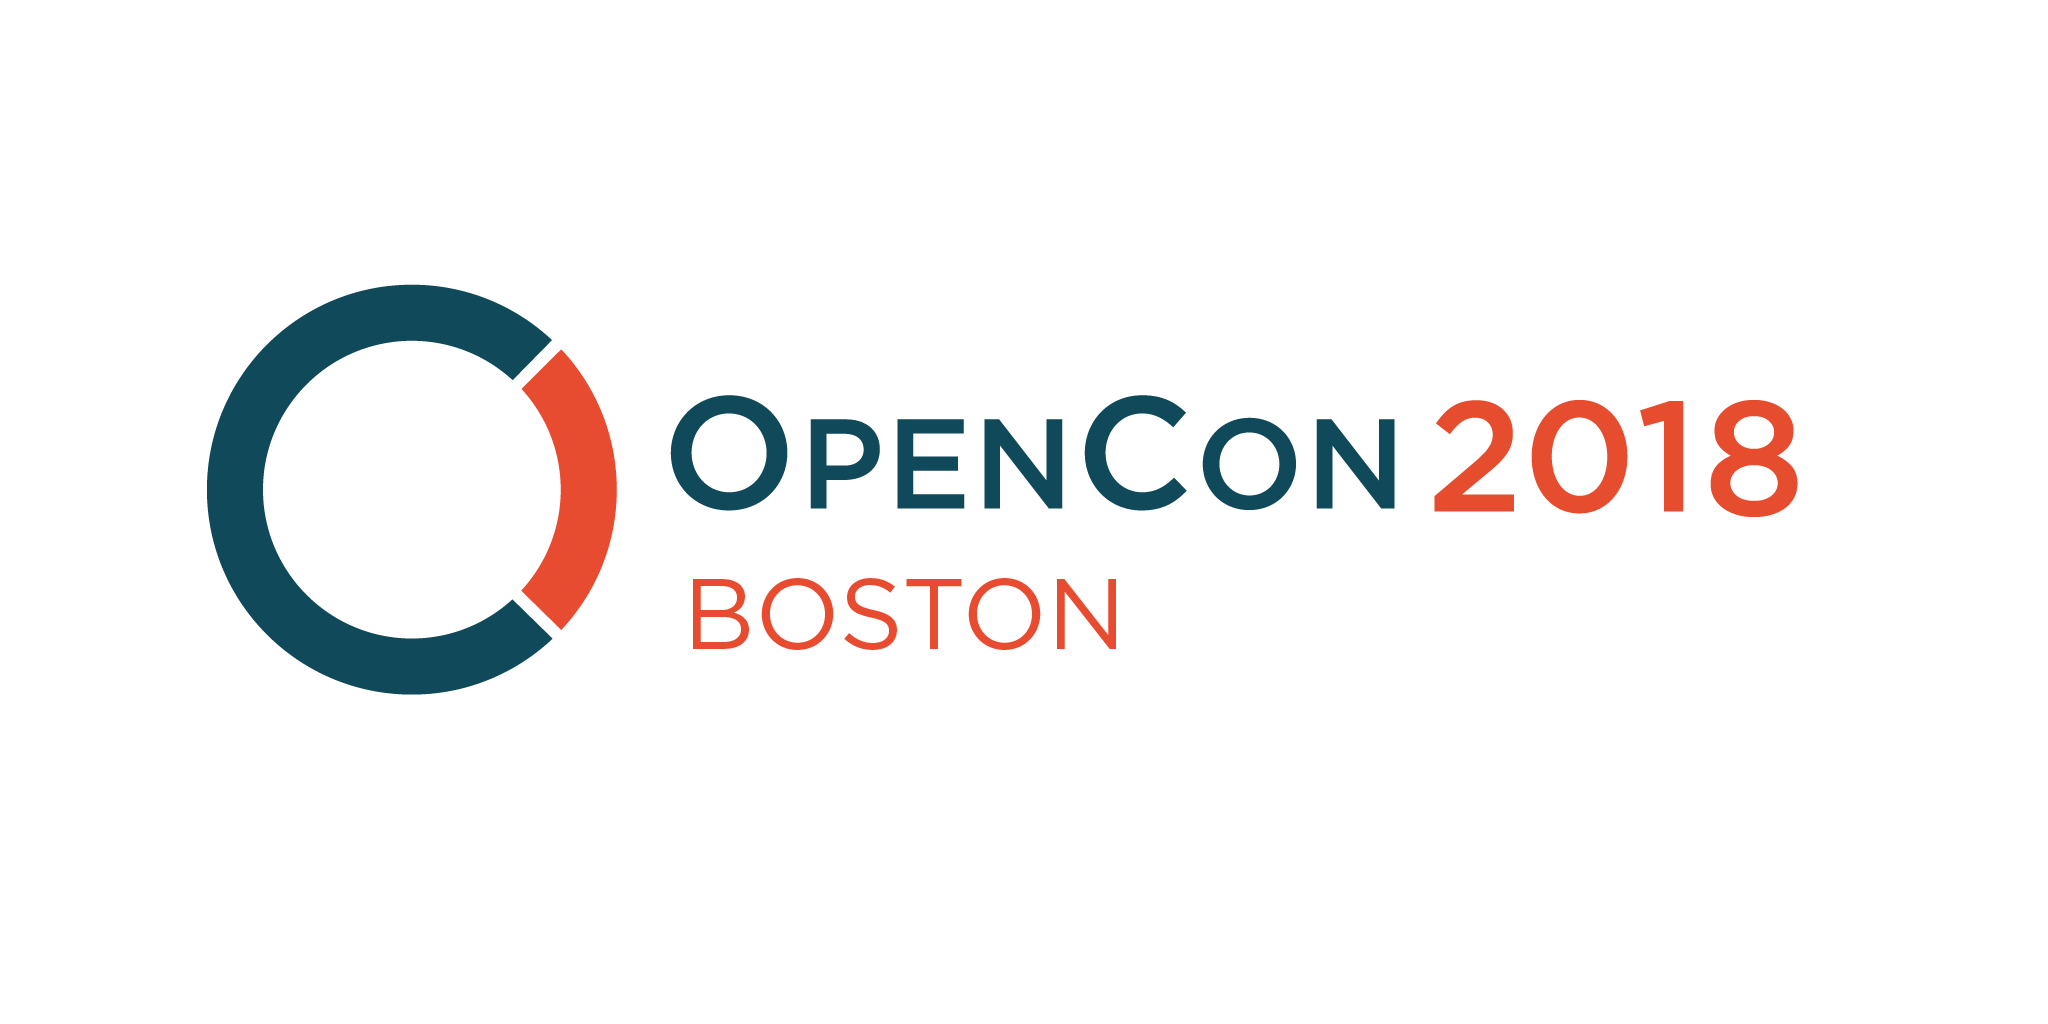 OpenCon 2018 Boston